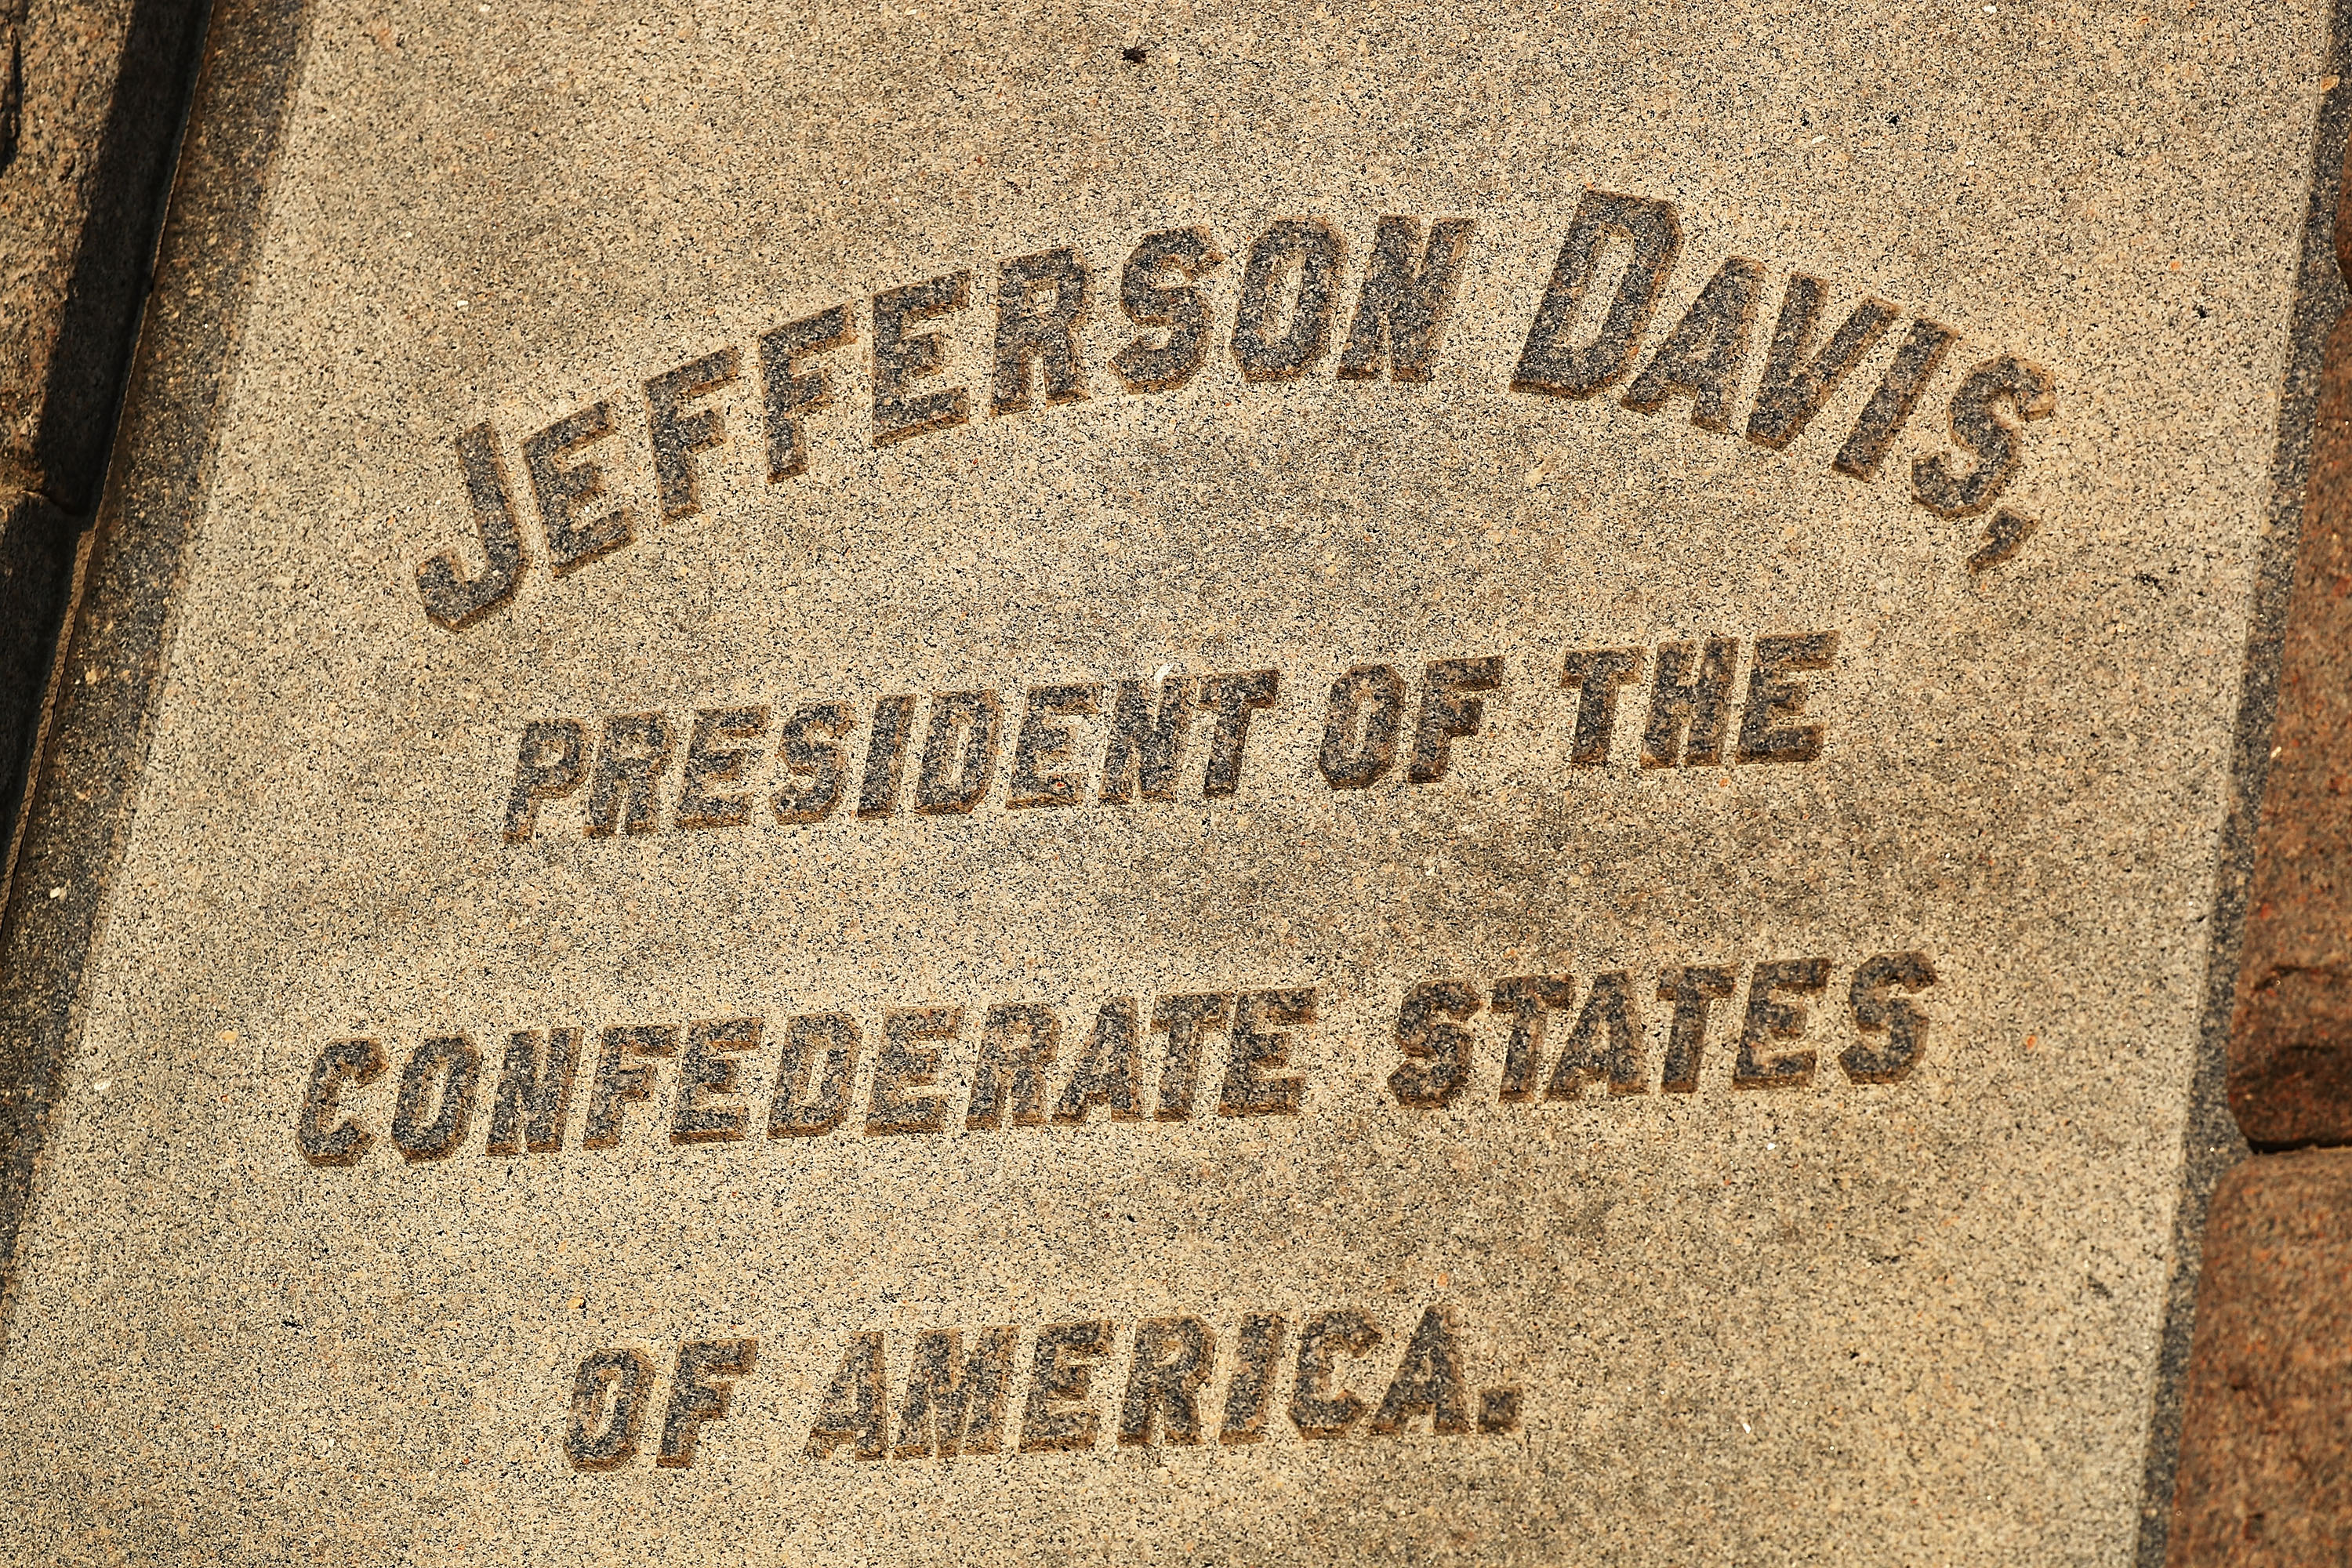 A monument to Jefferson Davis